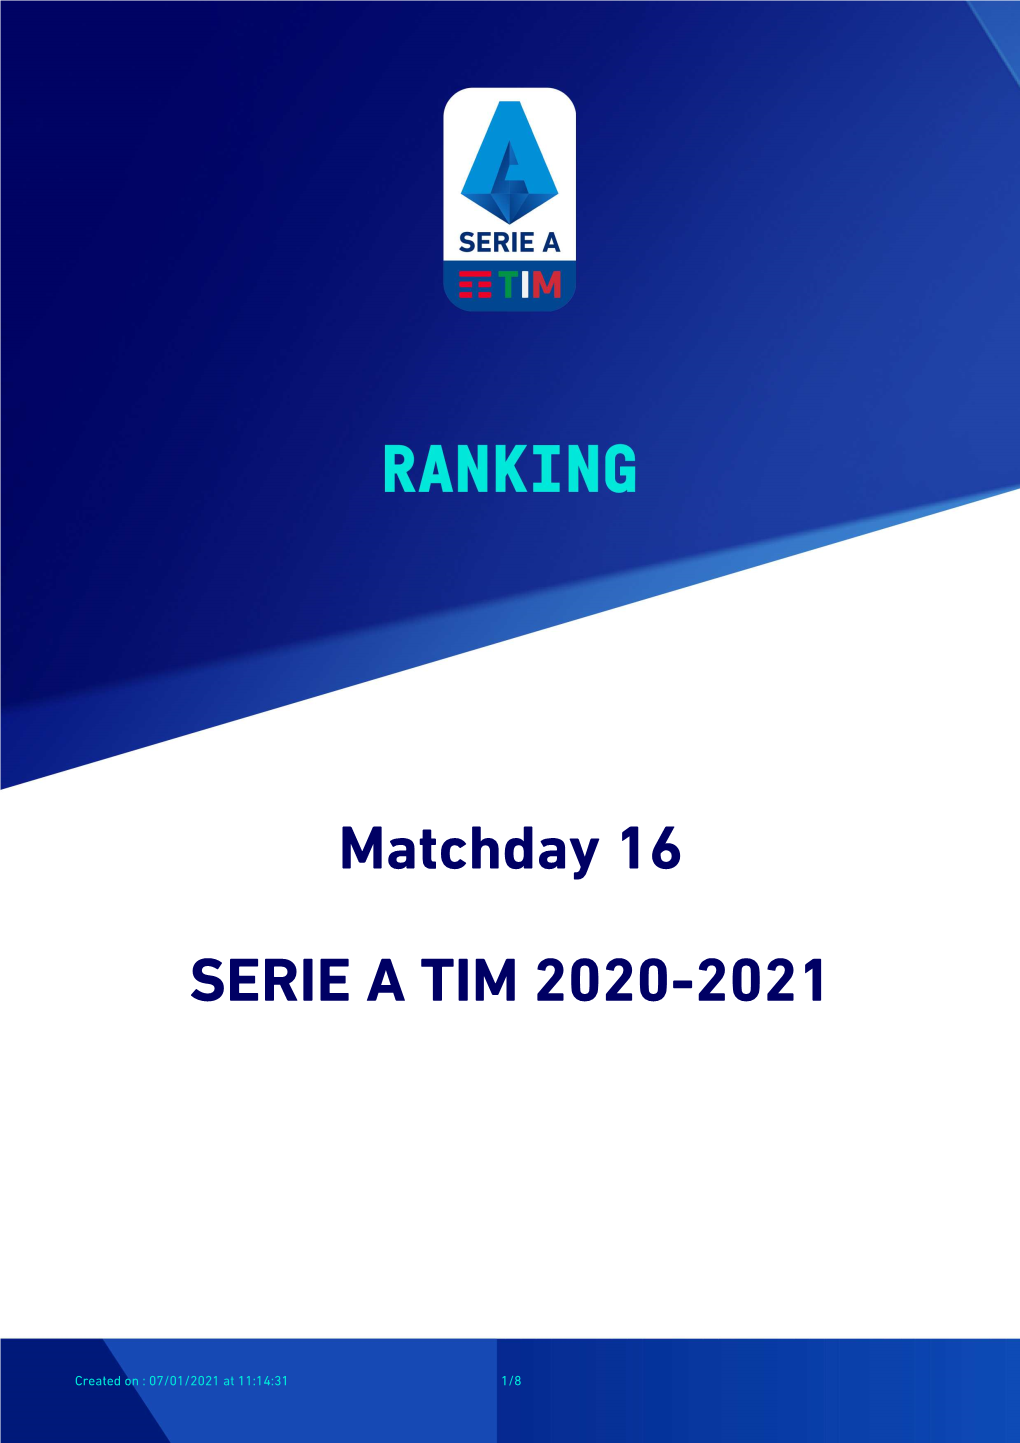 Matchday 16 SERIE a TIM 2020-2021